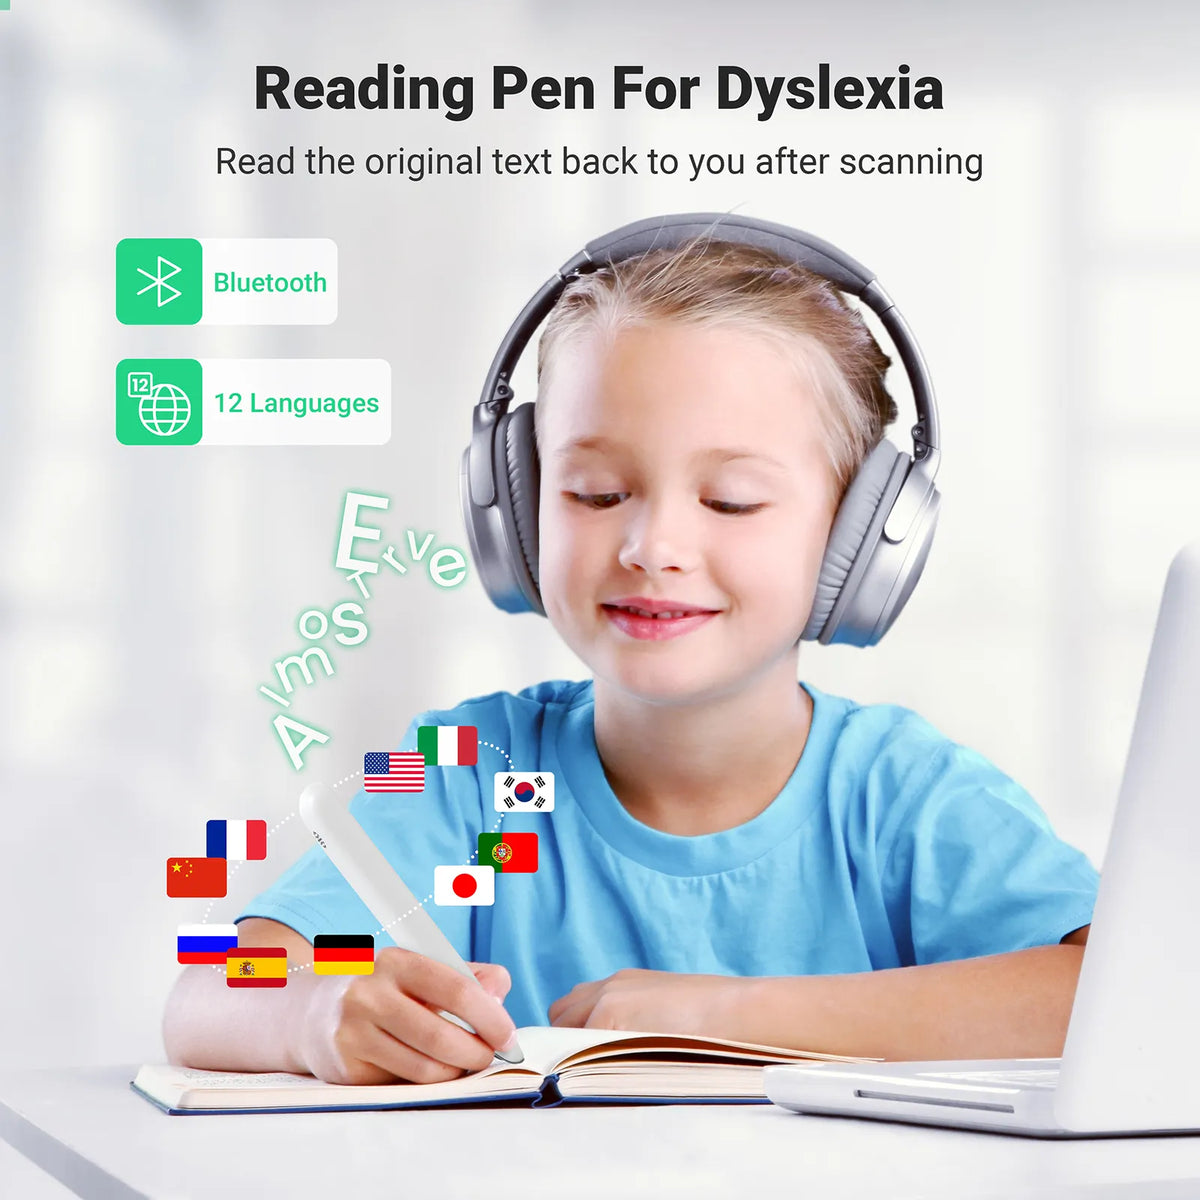 SVANTTO reading pen for dyslexia